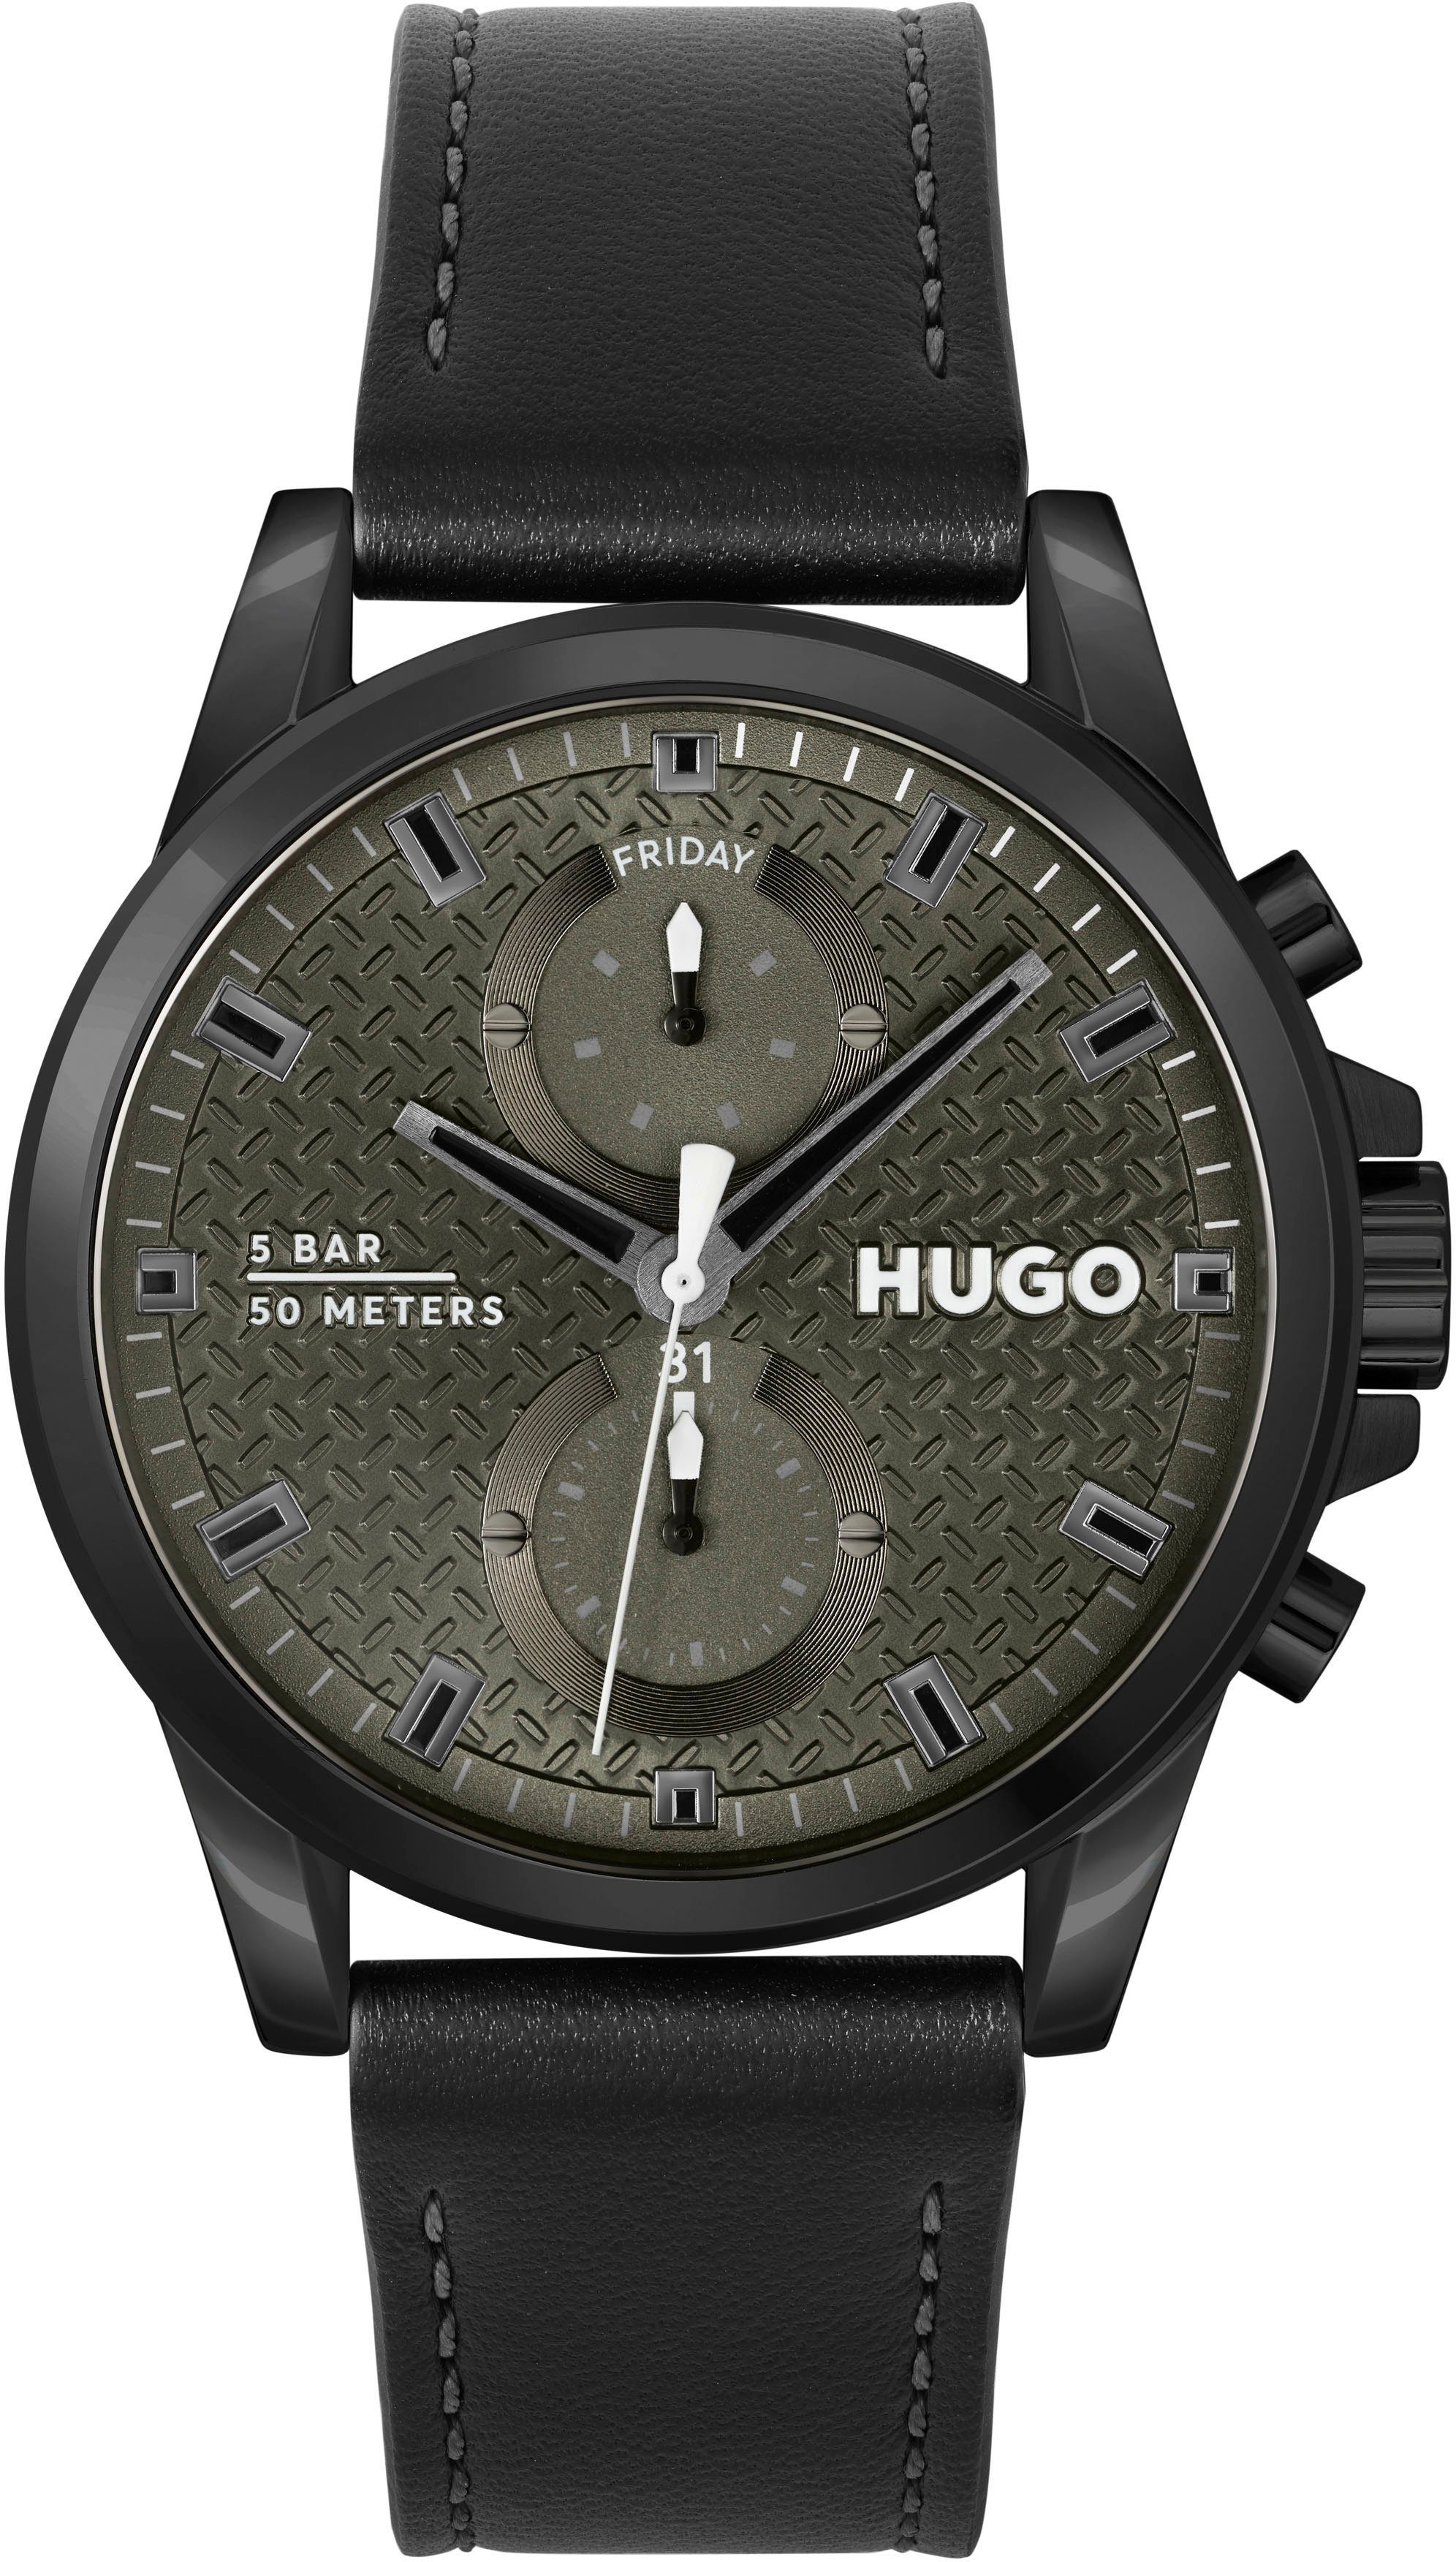 HUGO Multifunktionsuhr #RUN, 1530313, Quarzuhr, Armbanduhr, Herrenuhr, Datum mit Tag und Wochentag